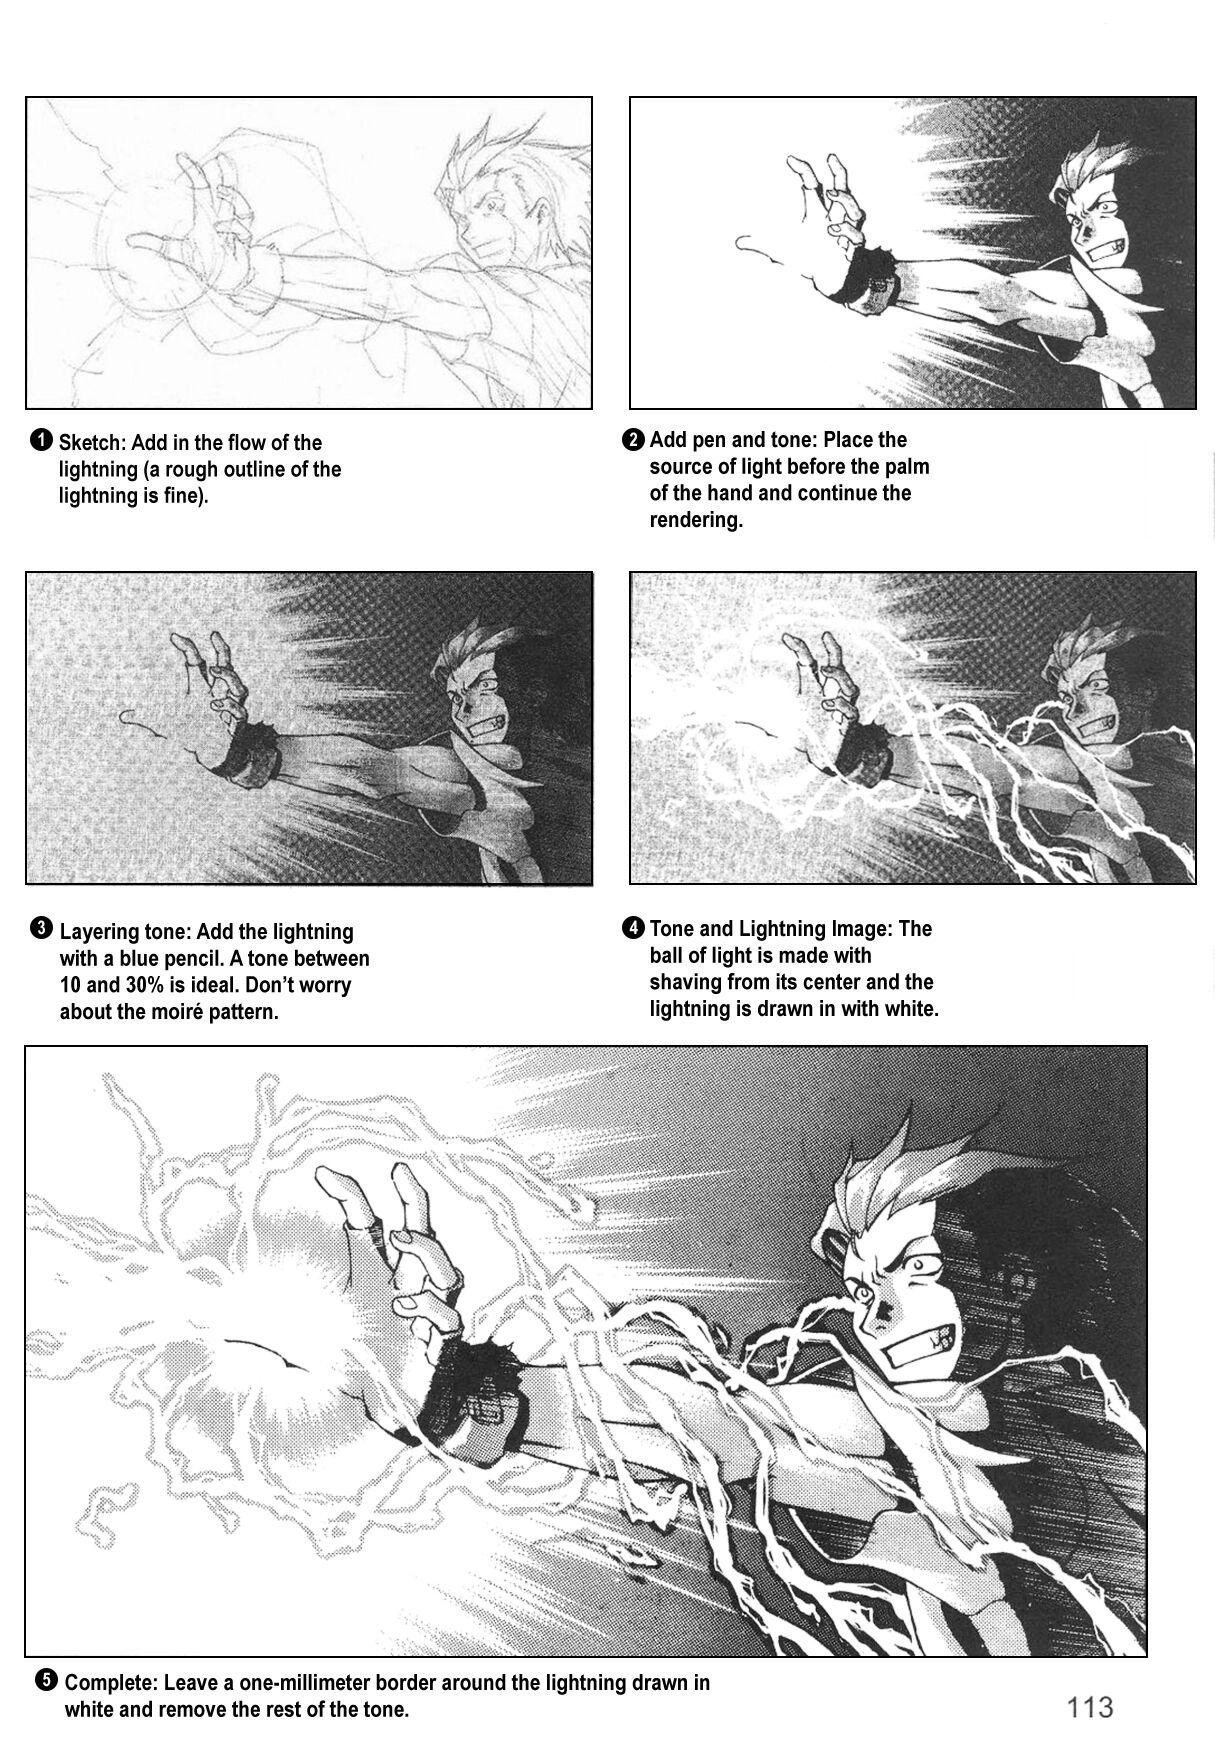 How to Draw Manga Vol. 24, Occult & Horror by Hikaru Hayashi 116